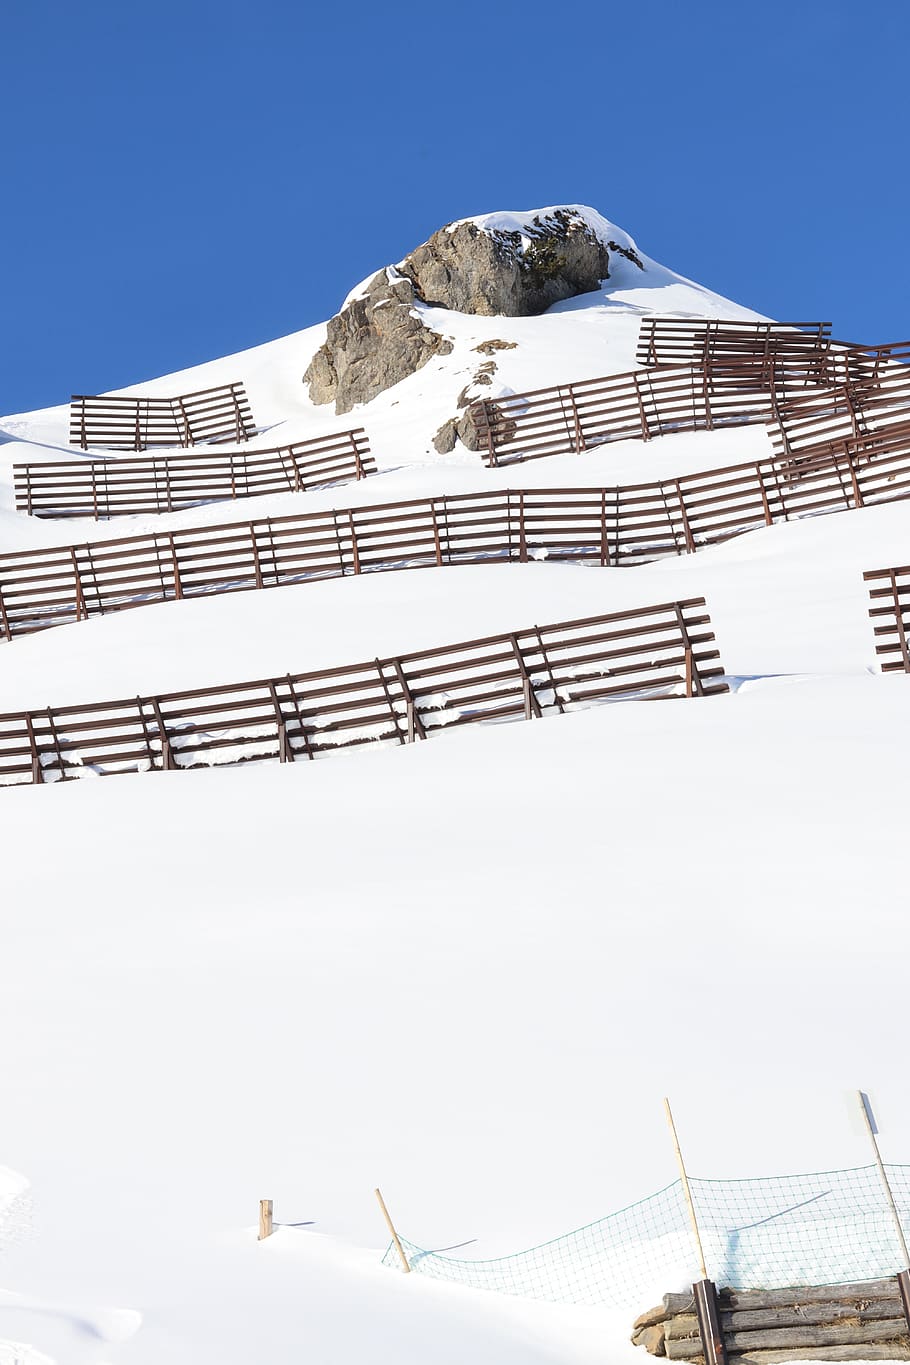 avalanche fence, winter, snow, alps, mountain, austria, rock, snowy mountain, alpine, cold temperature